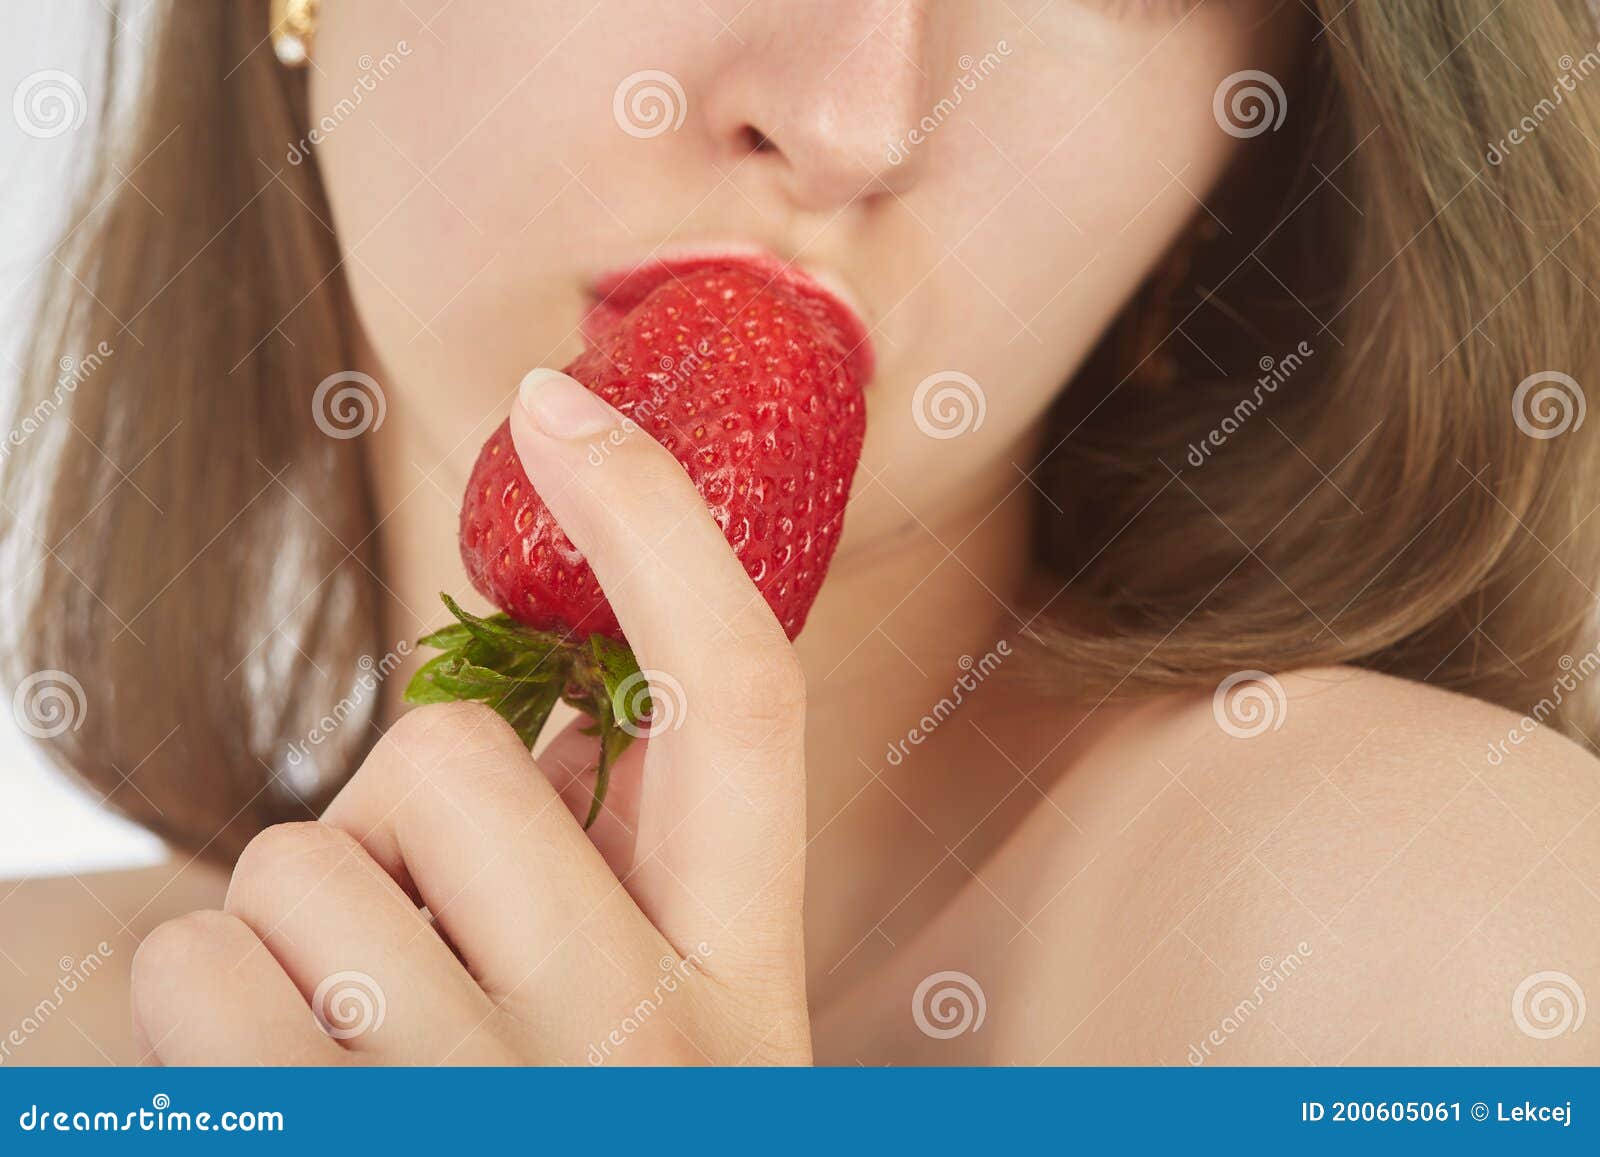 Woman Eats Strawberry Stock Image Image Of Dessert 200605061 